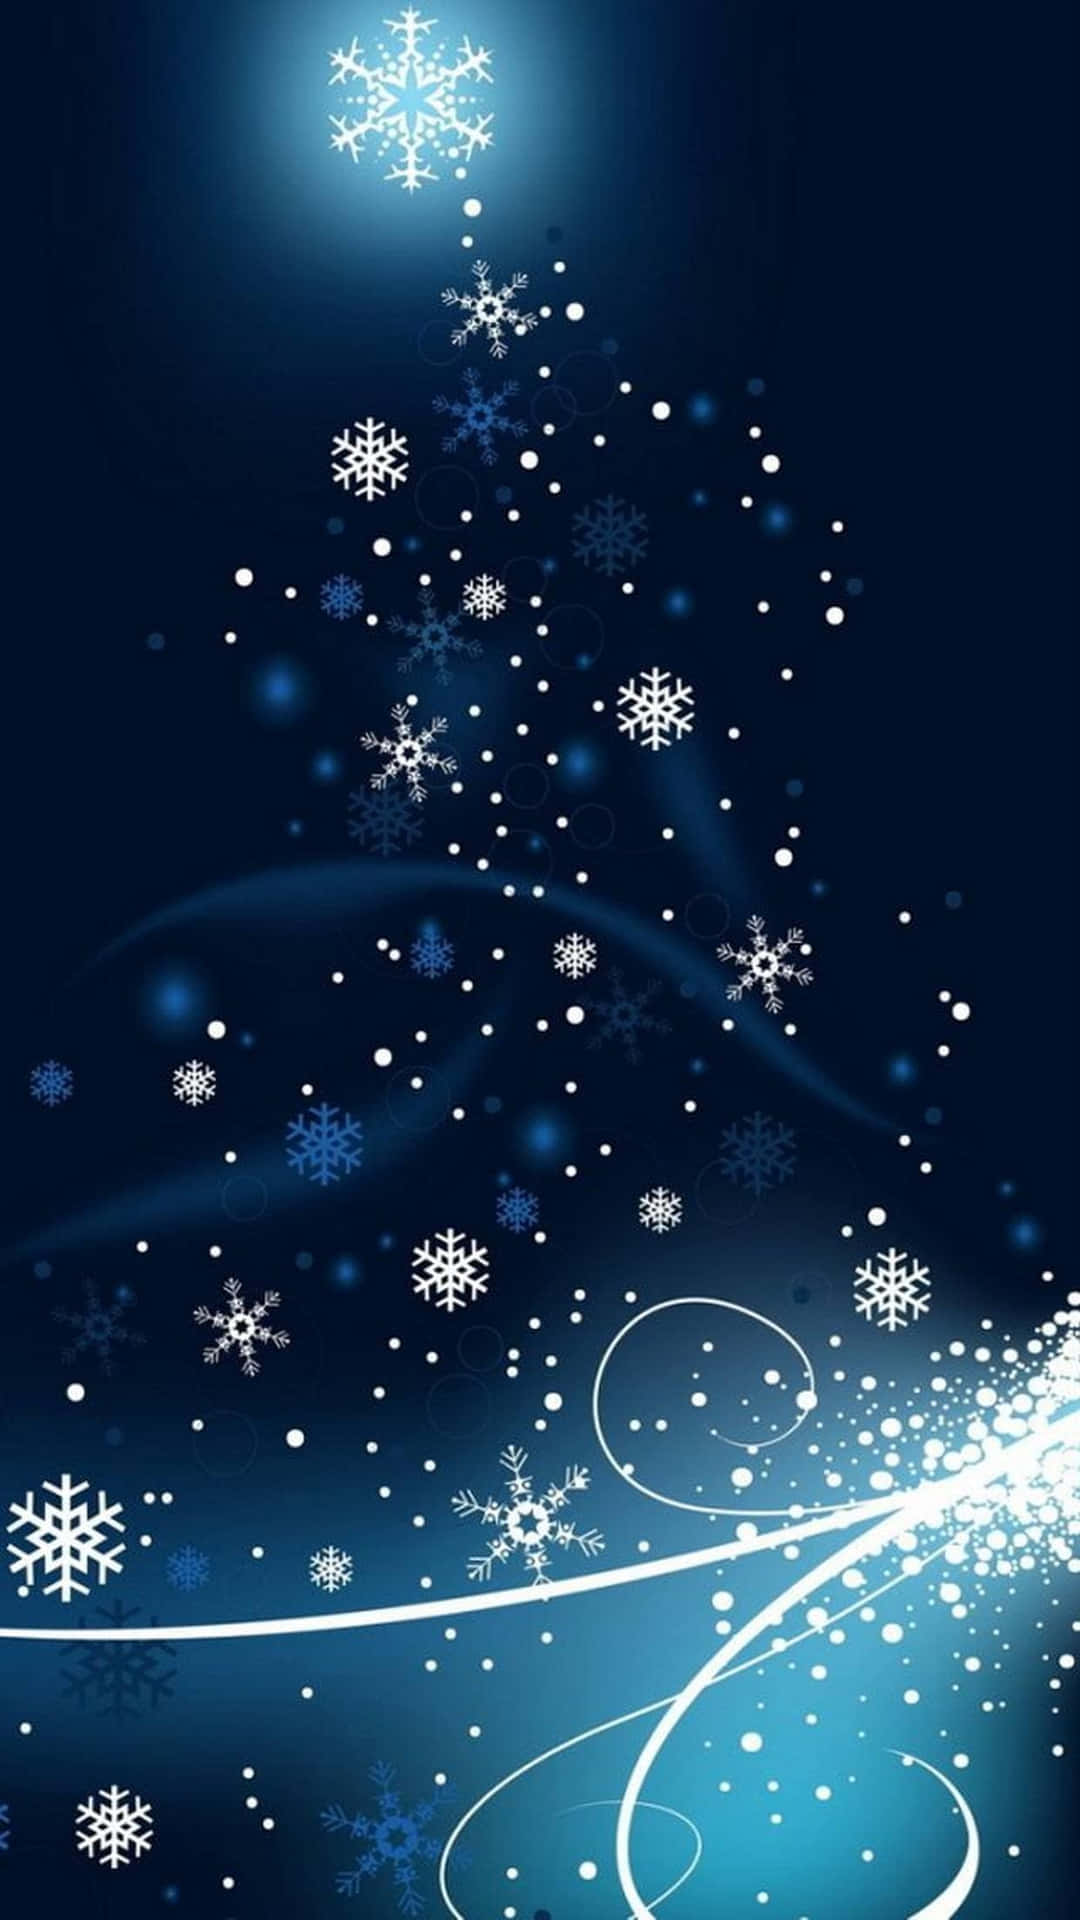 Free Christmas Magic Snowflakes Picture